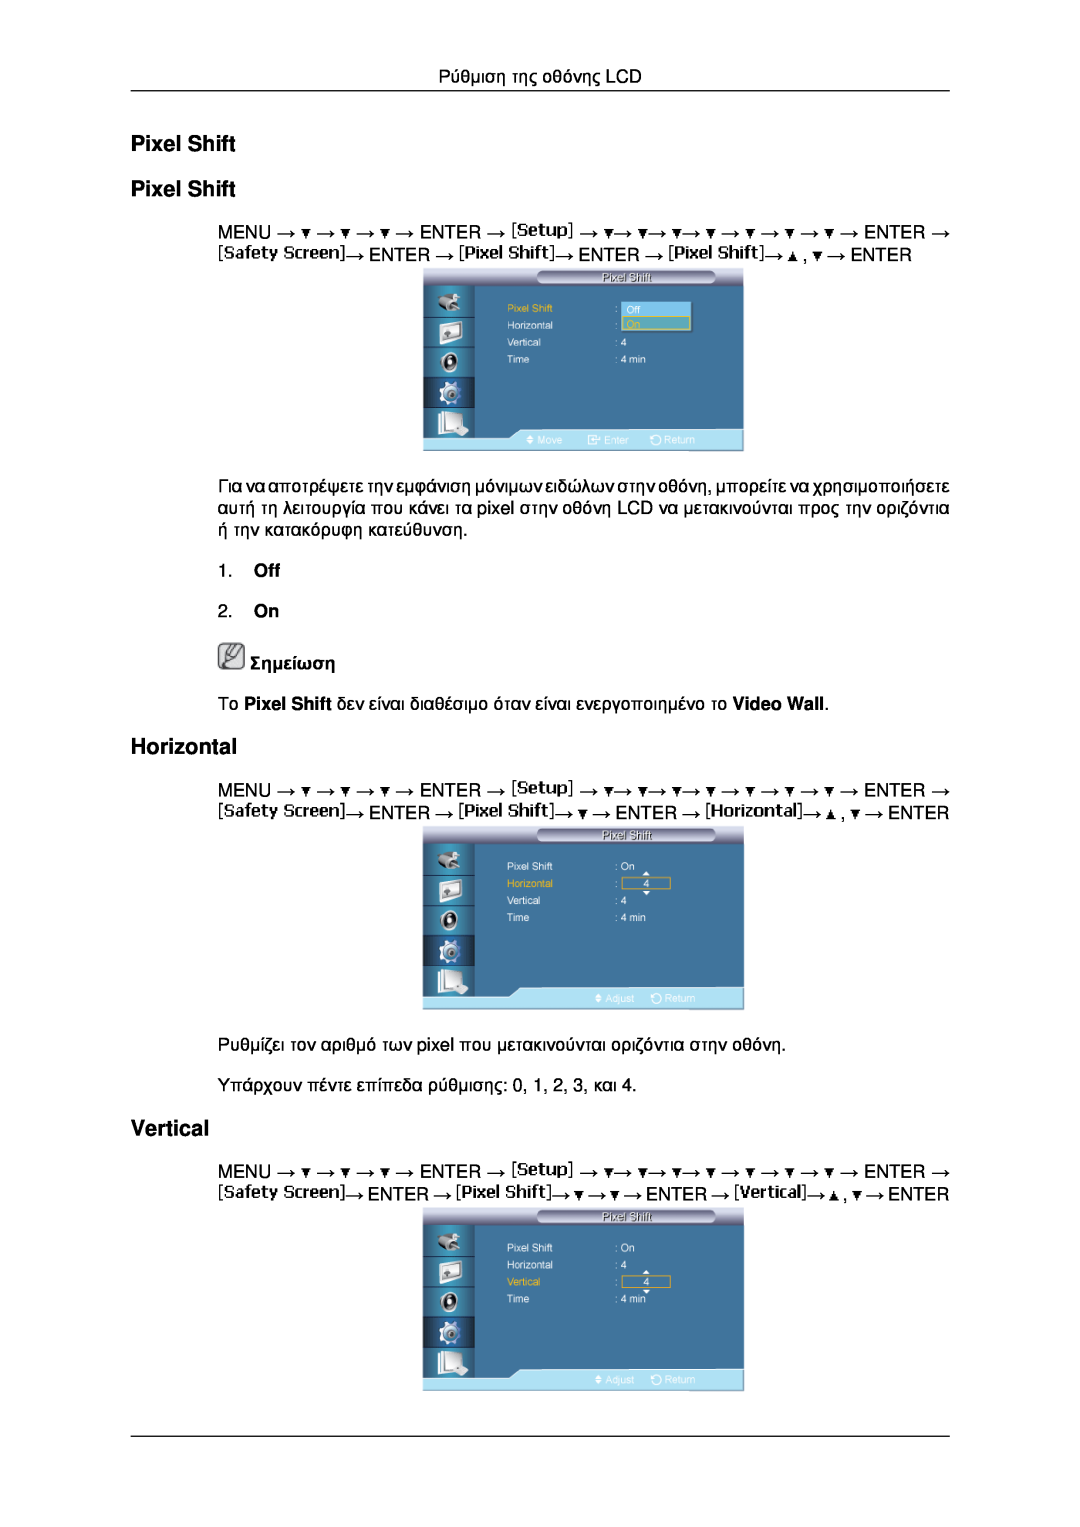 Samsung LH46MRPLBF/EN, LH40MRTLBC/EN, LH40MRPLBF/EN manual Pixel Shift Pixel Shift, Off 2. On Σημείωση, Horizontal, Vertical 